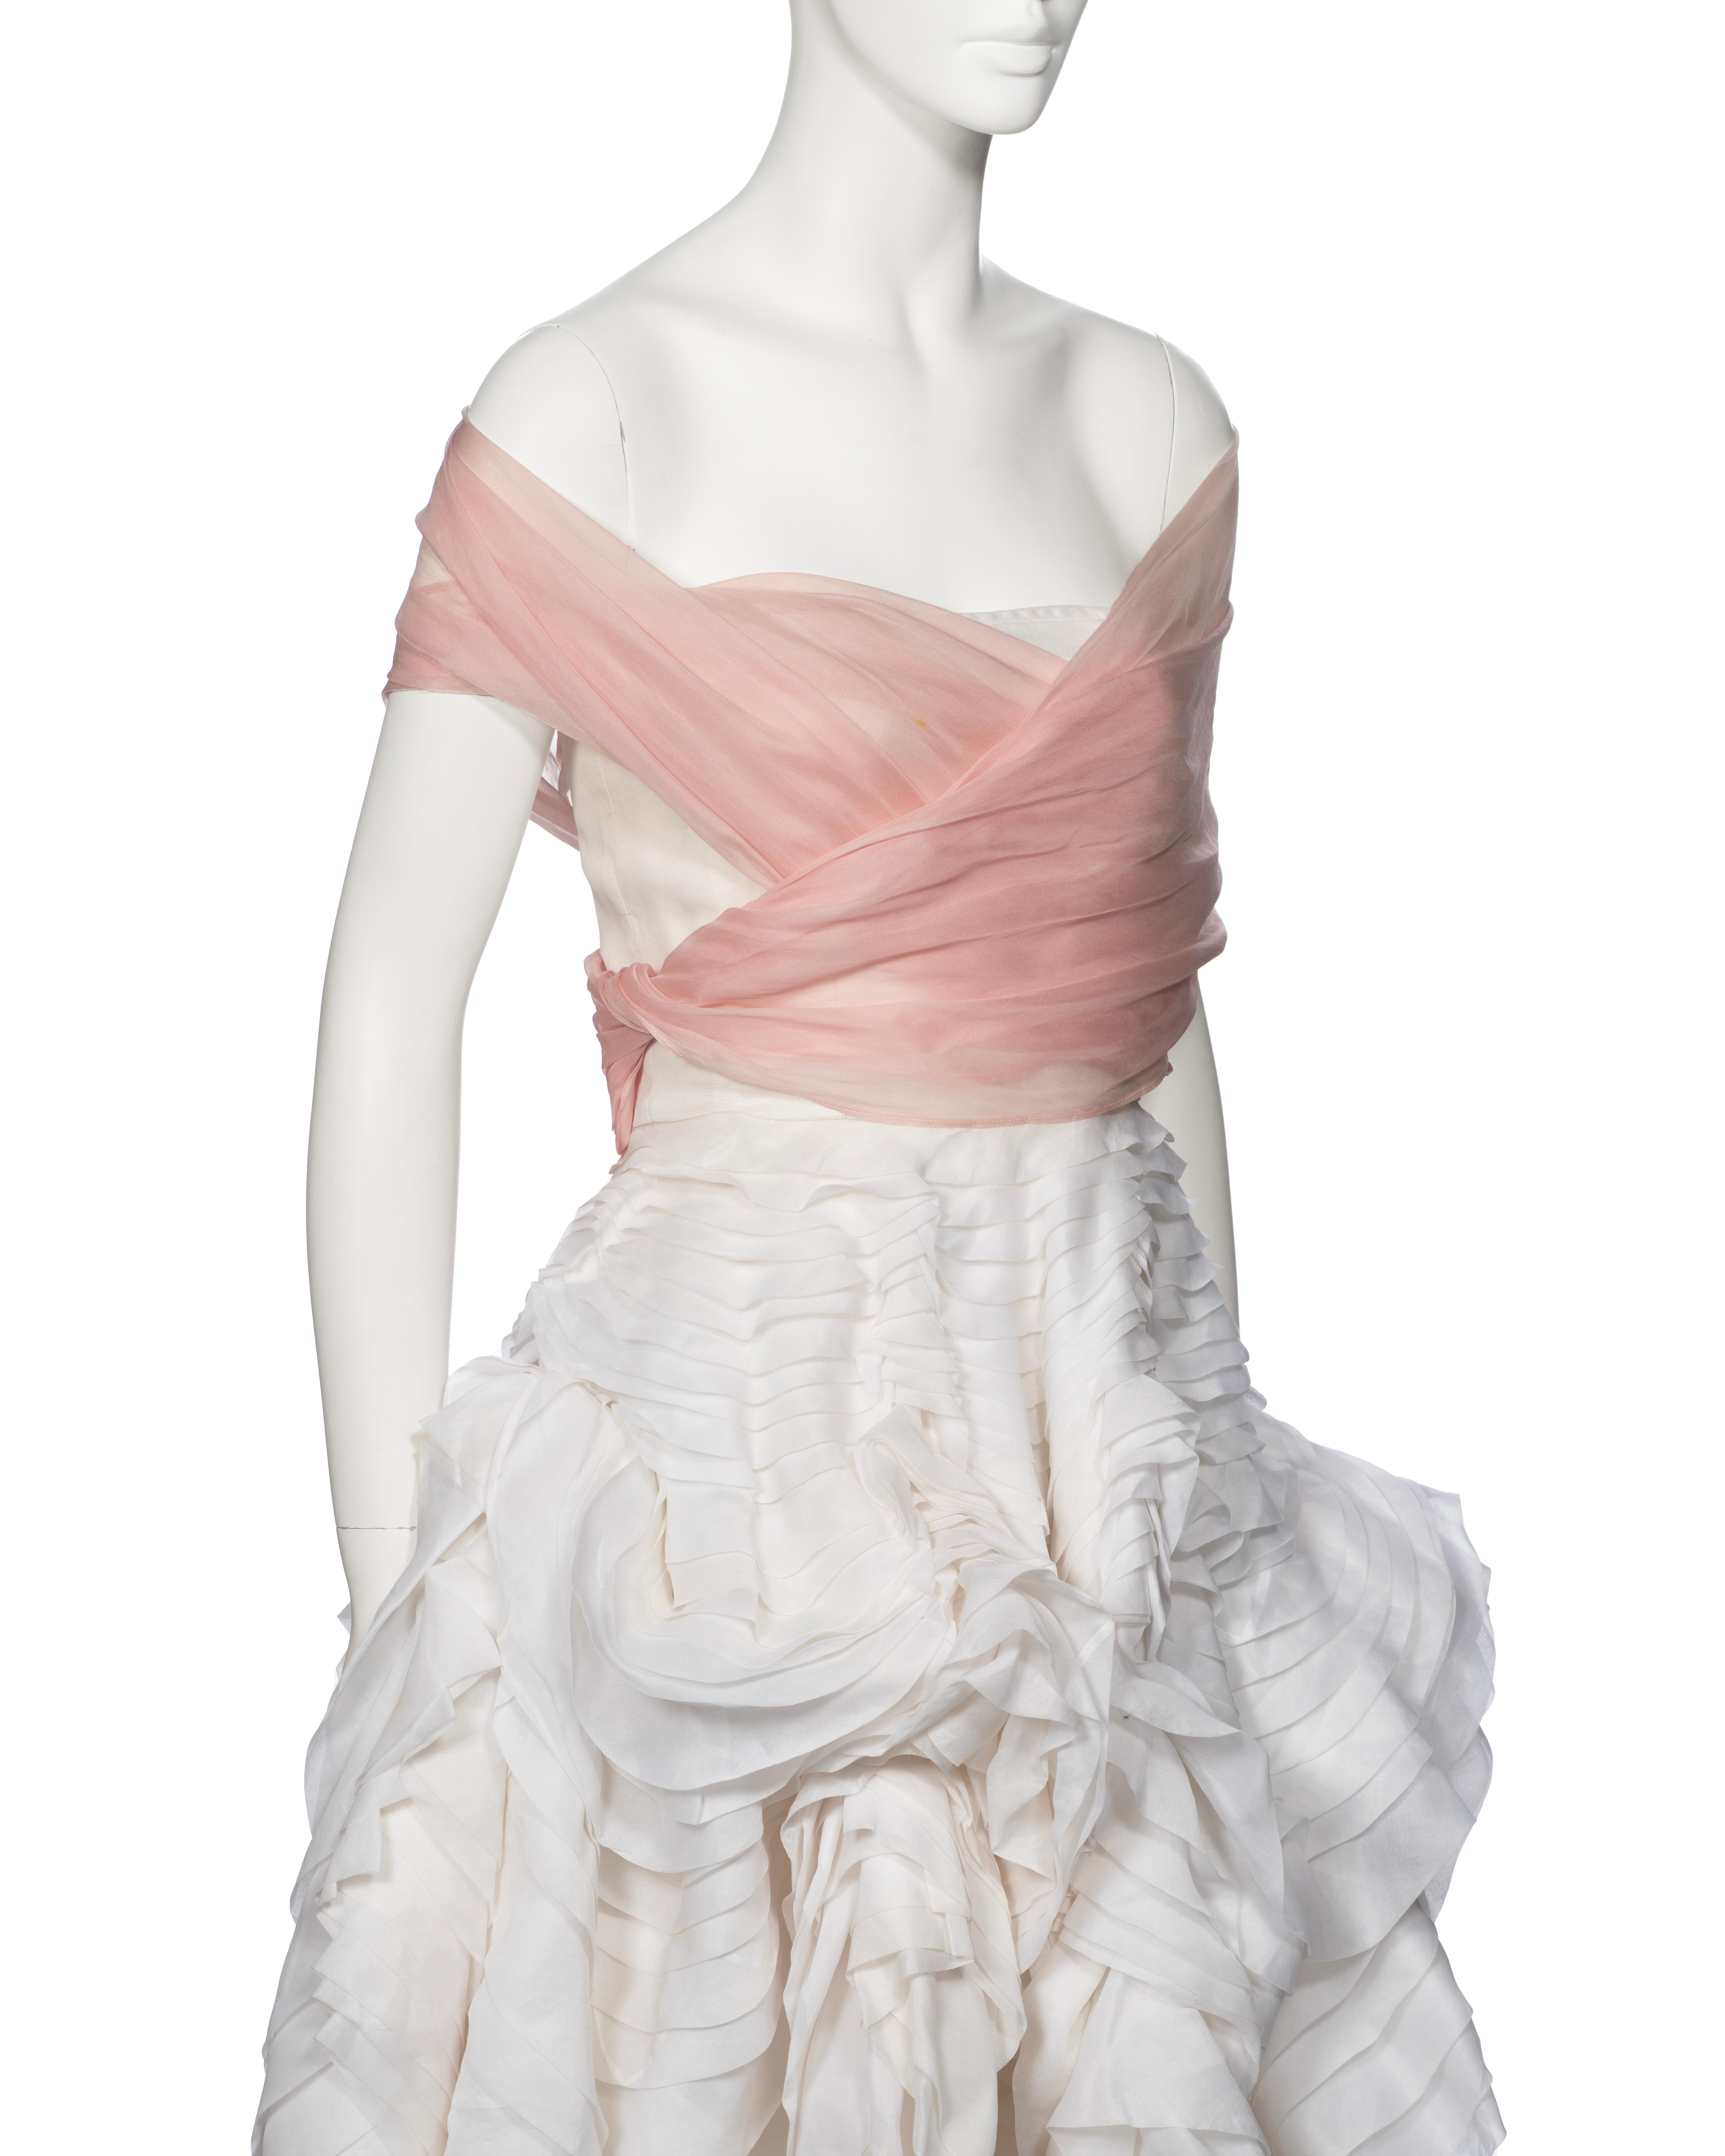 John Galliano Blanche DuBois Clam Dress, ss 1988 For Sale 11